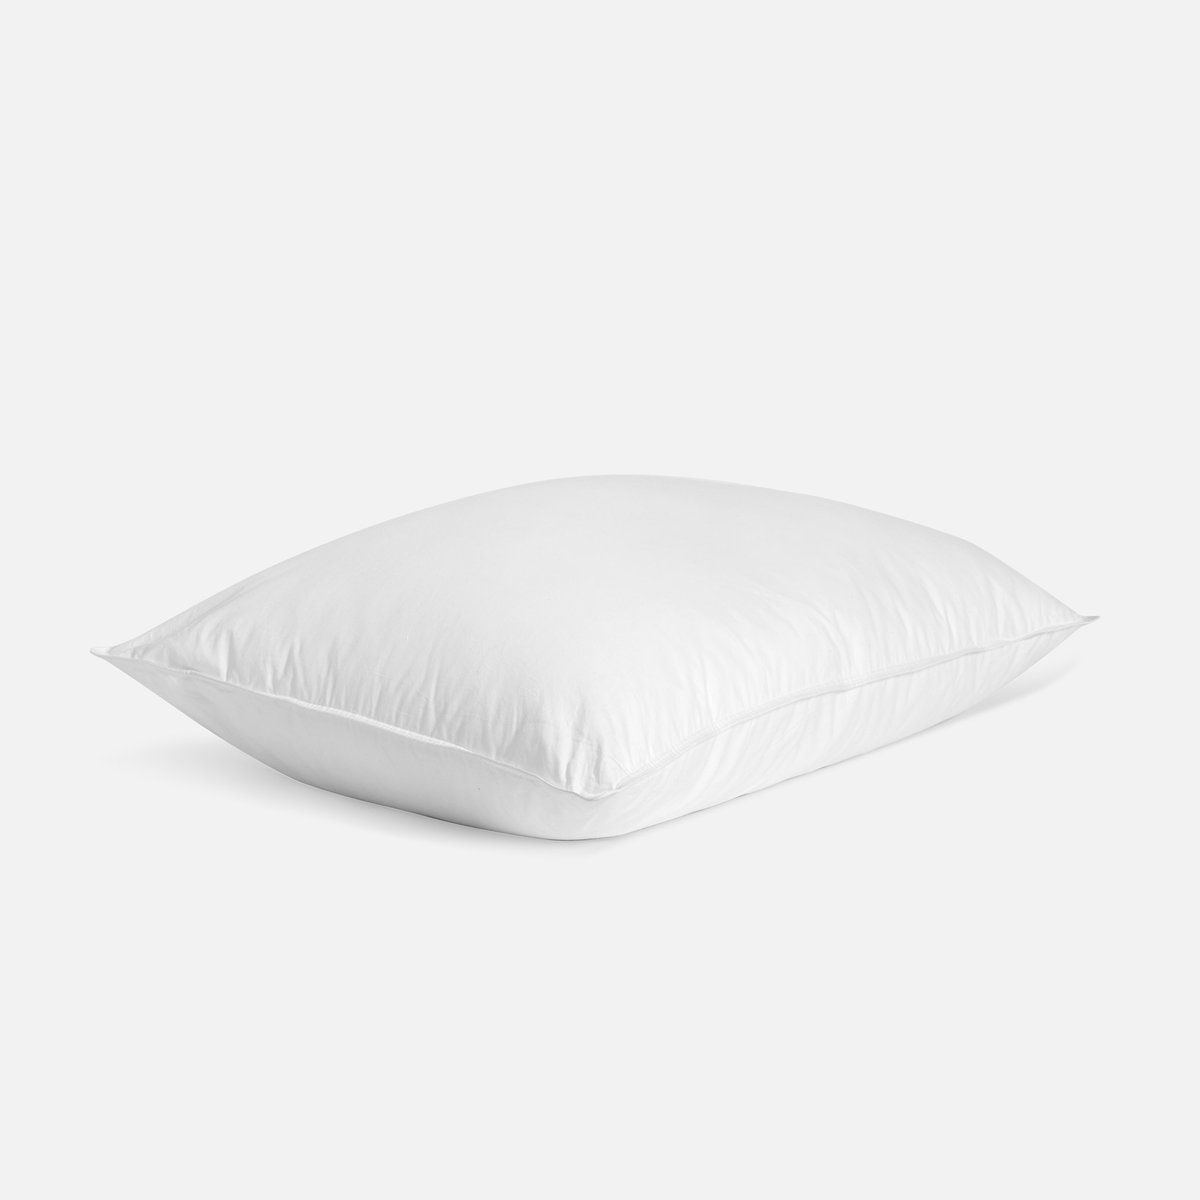 Details about   Switzerland Cushion Pillow Down Pillows 65x100 cm 100% Down Fluffy Soft show original title 